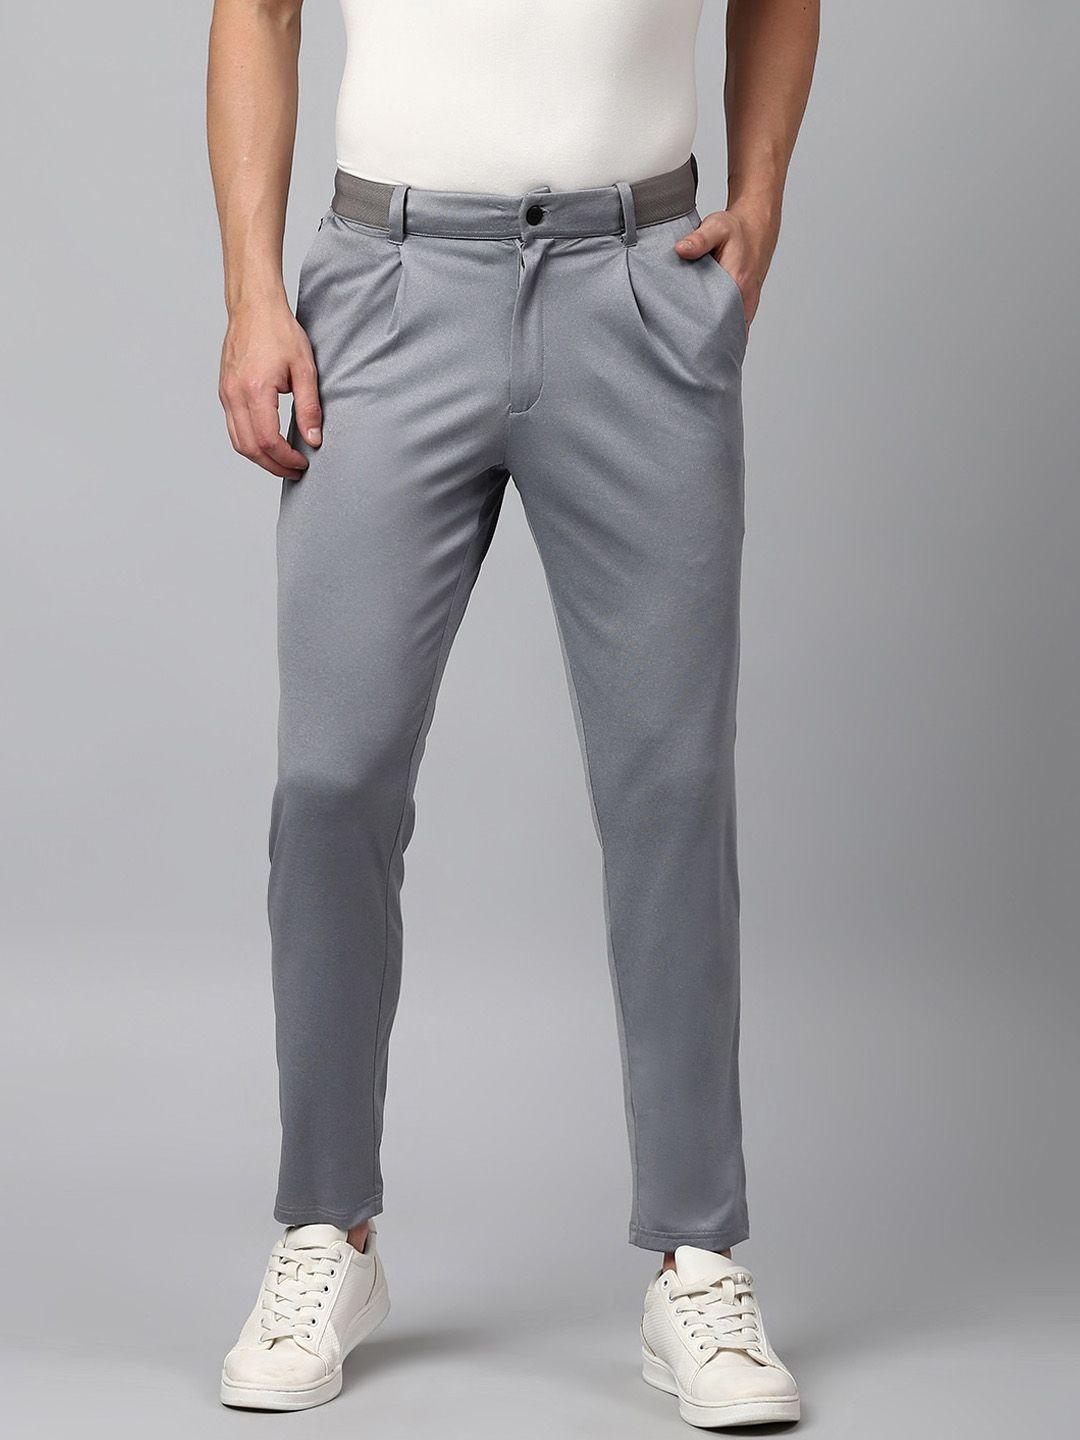 slowave men mid-rise plain pleated formal trousers